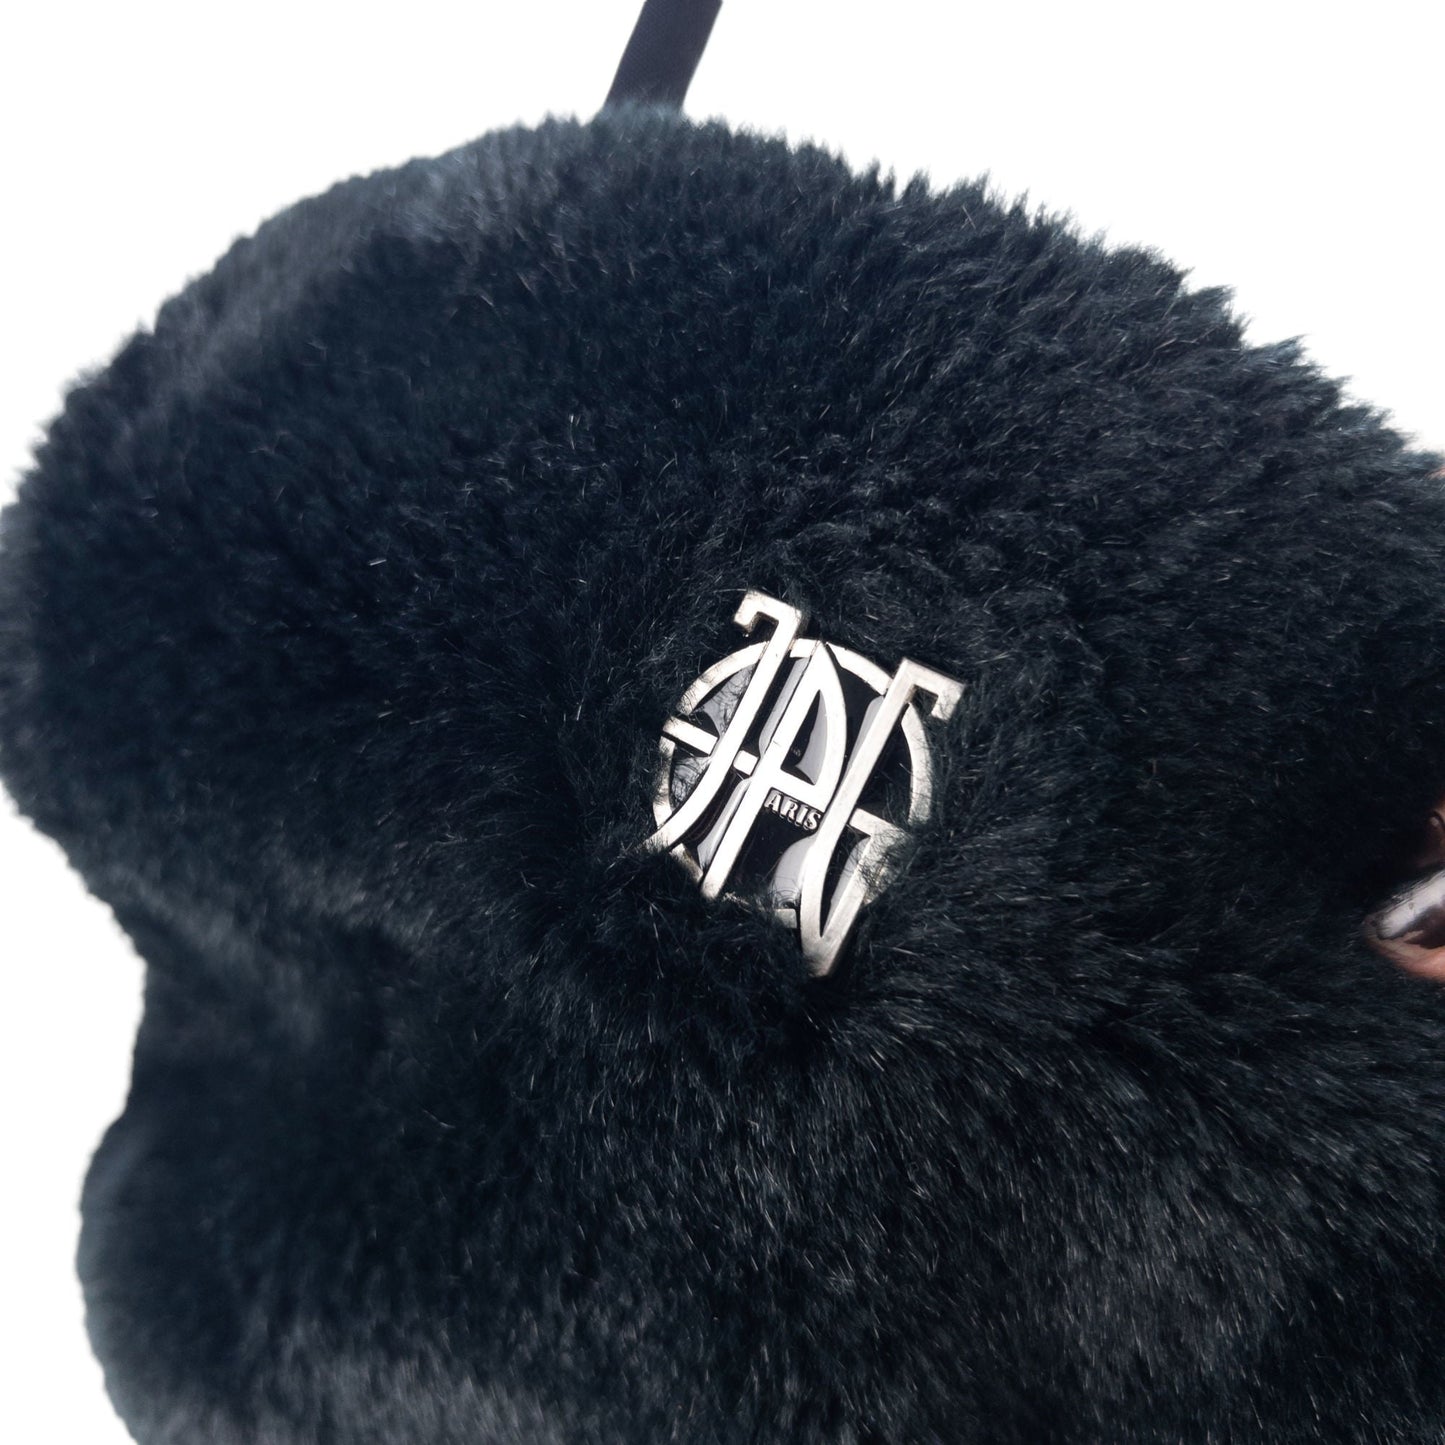 Vintage Jean Paul Gaultier Faux Fur Mini Handbag